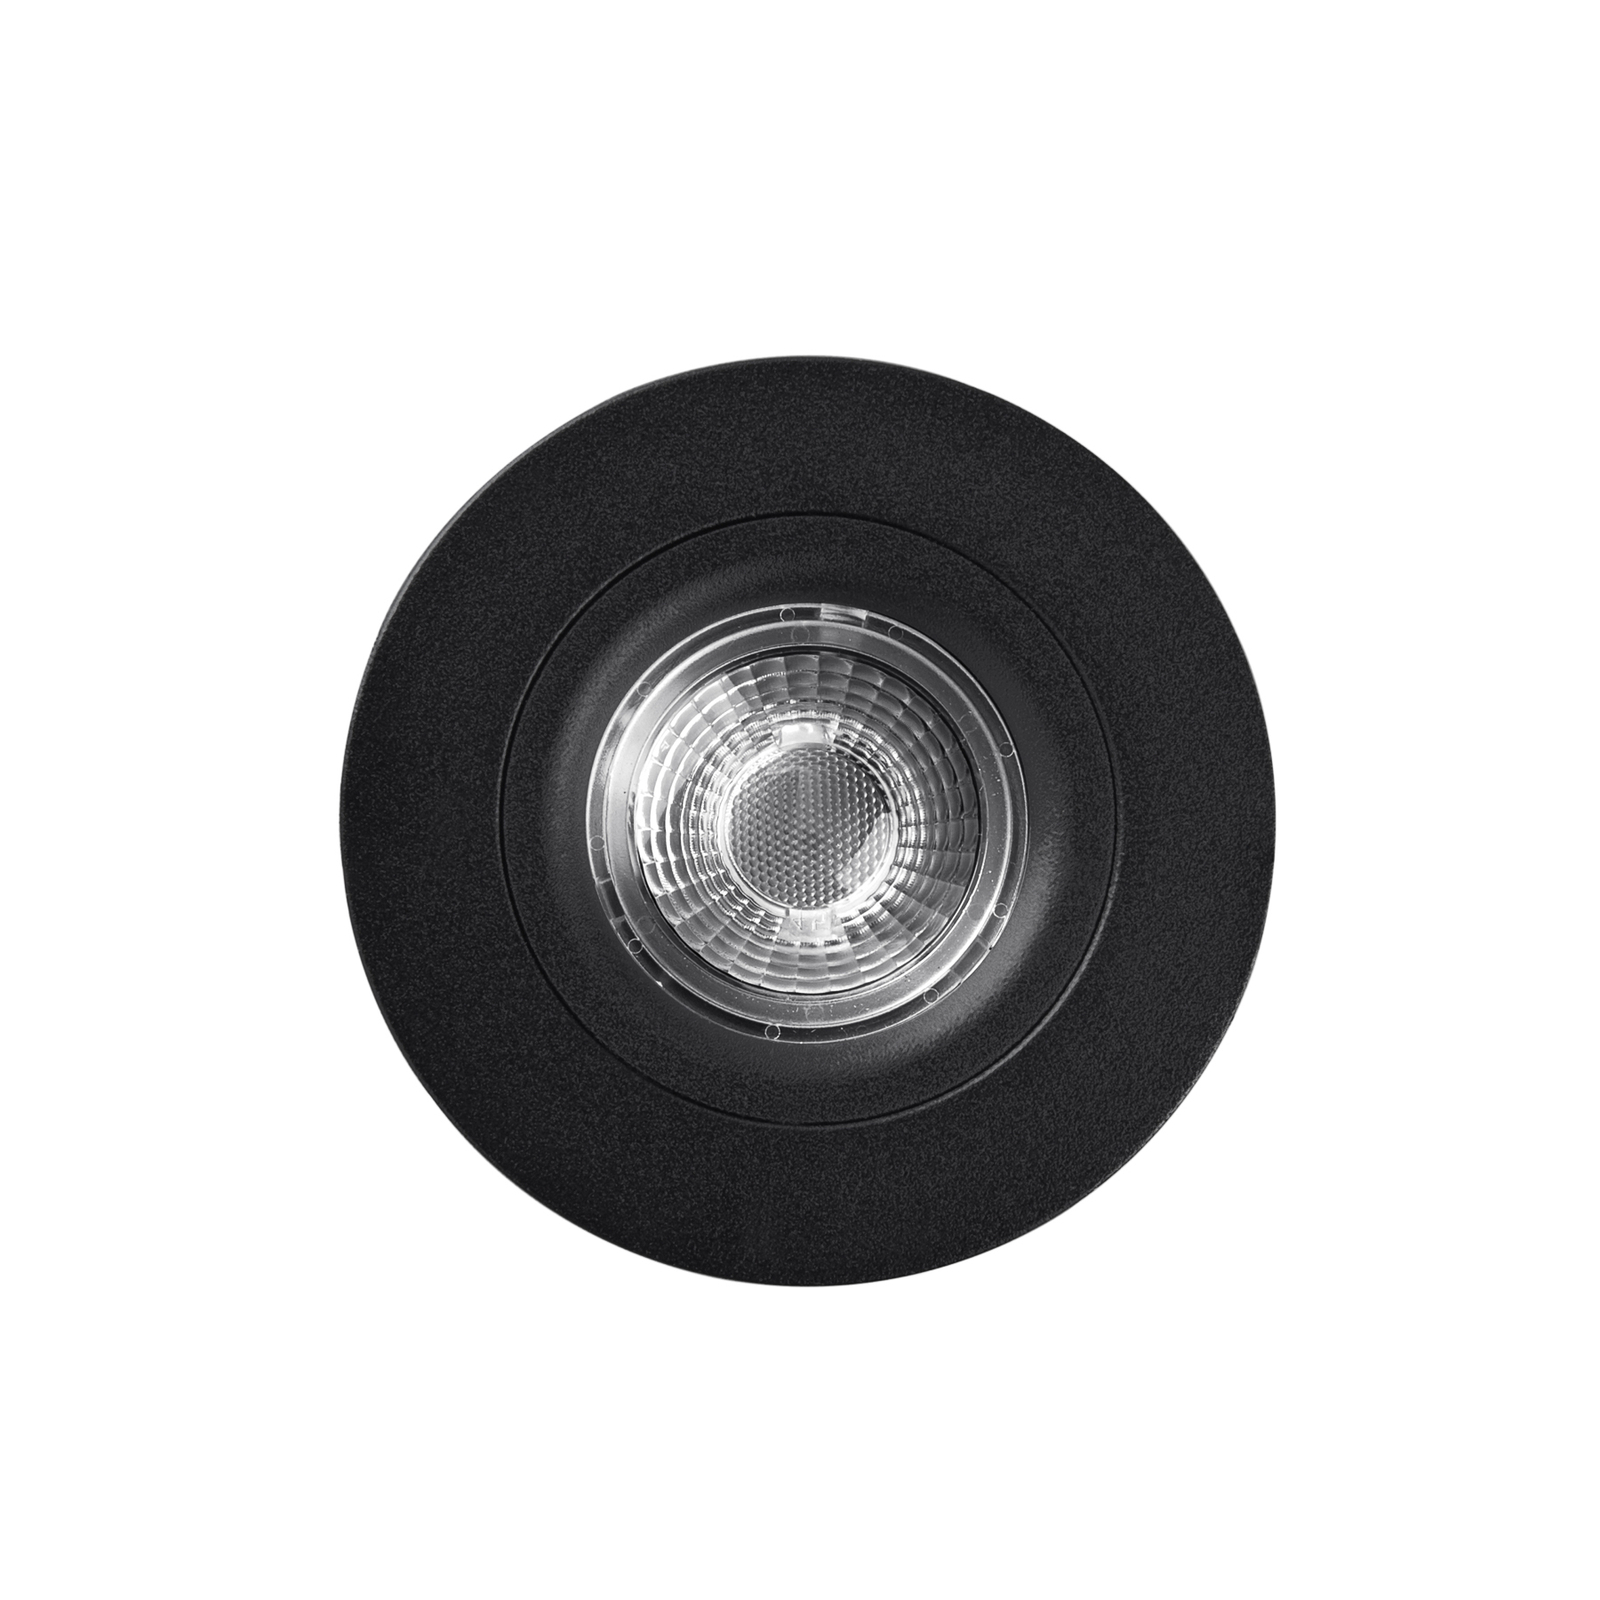 DL6809 LED downlight, round, black